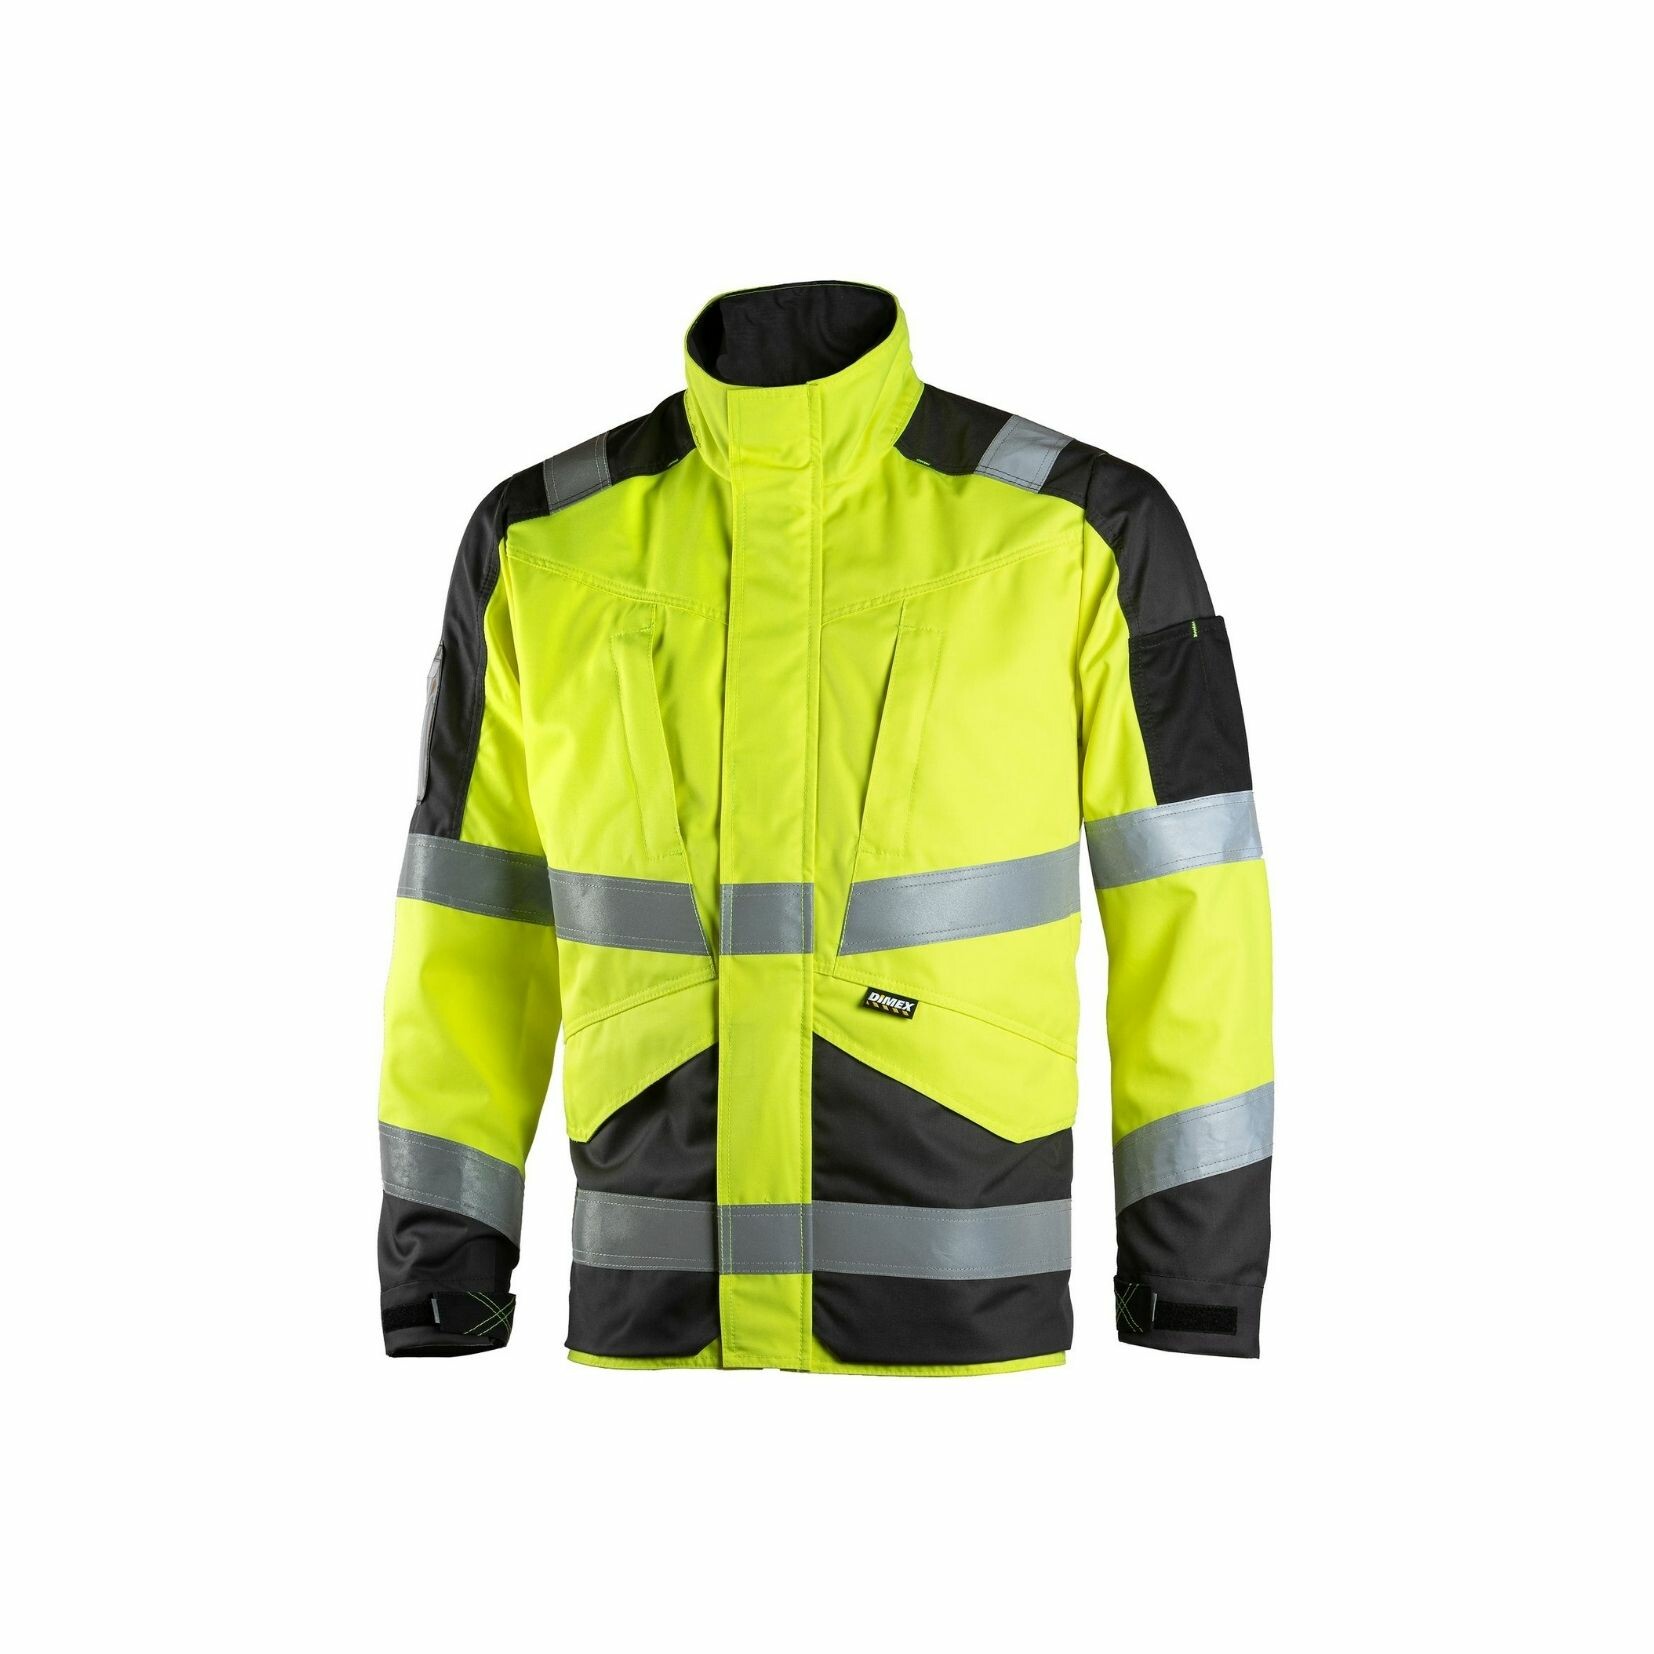 Dimex ecological safety jacket